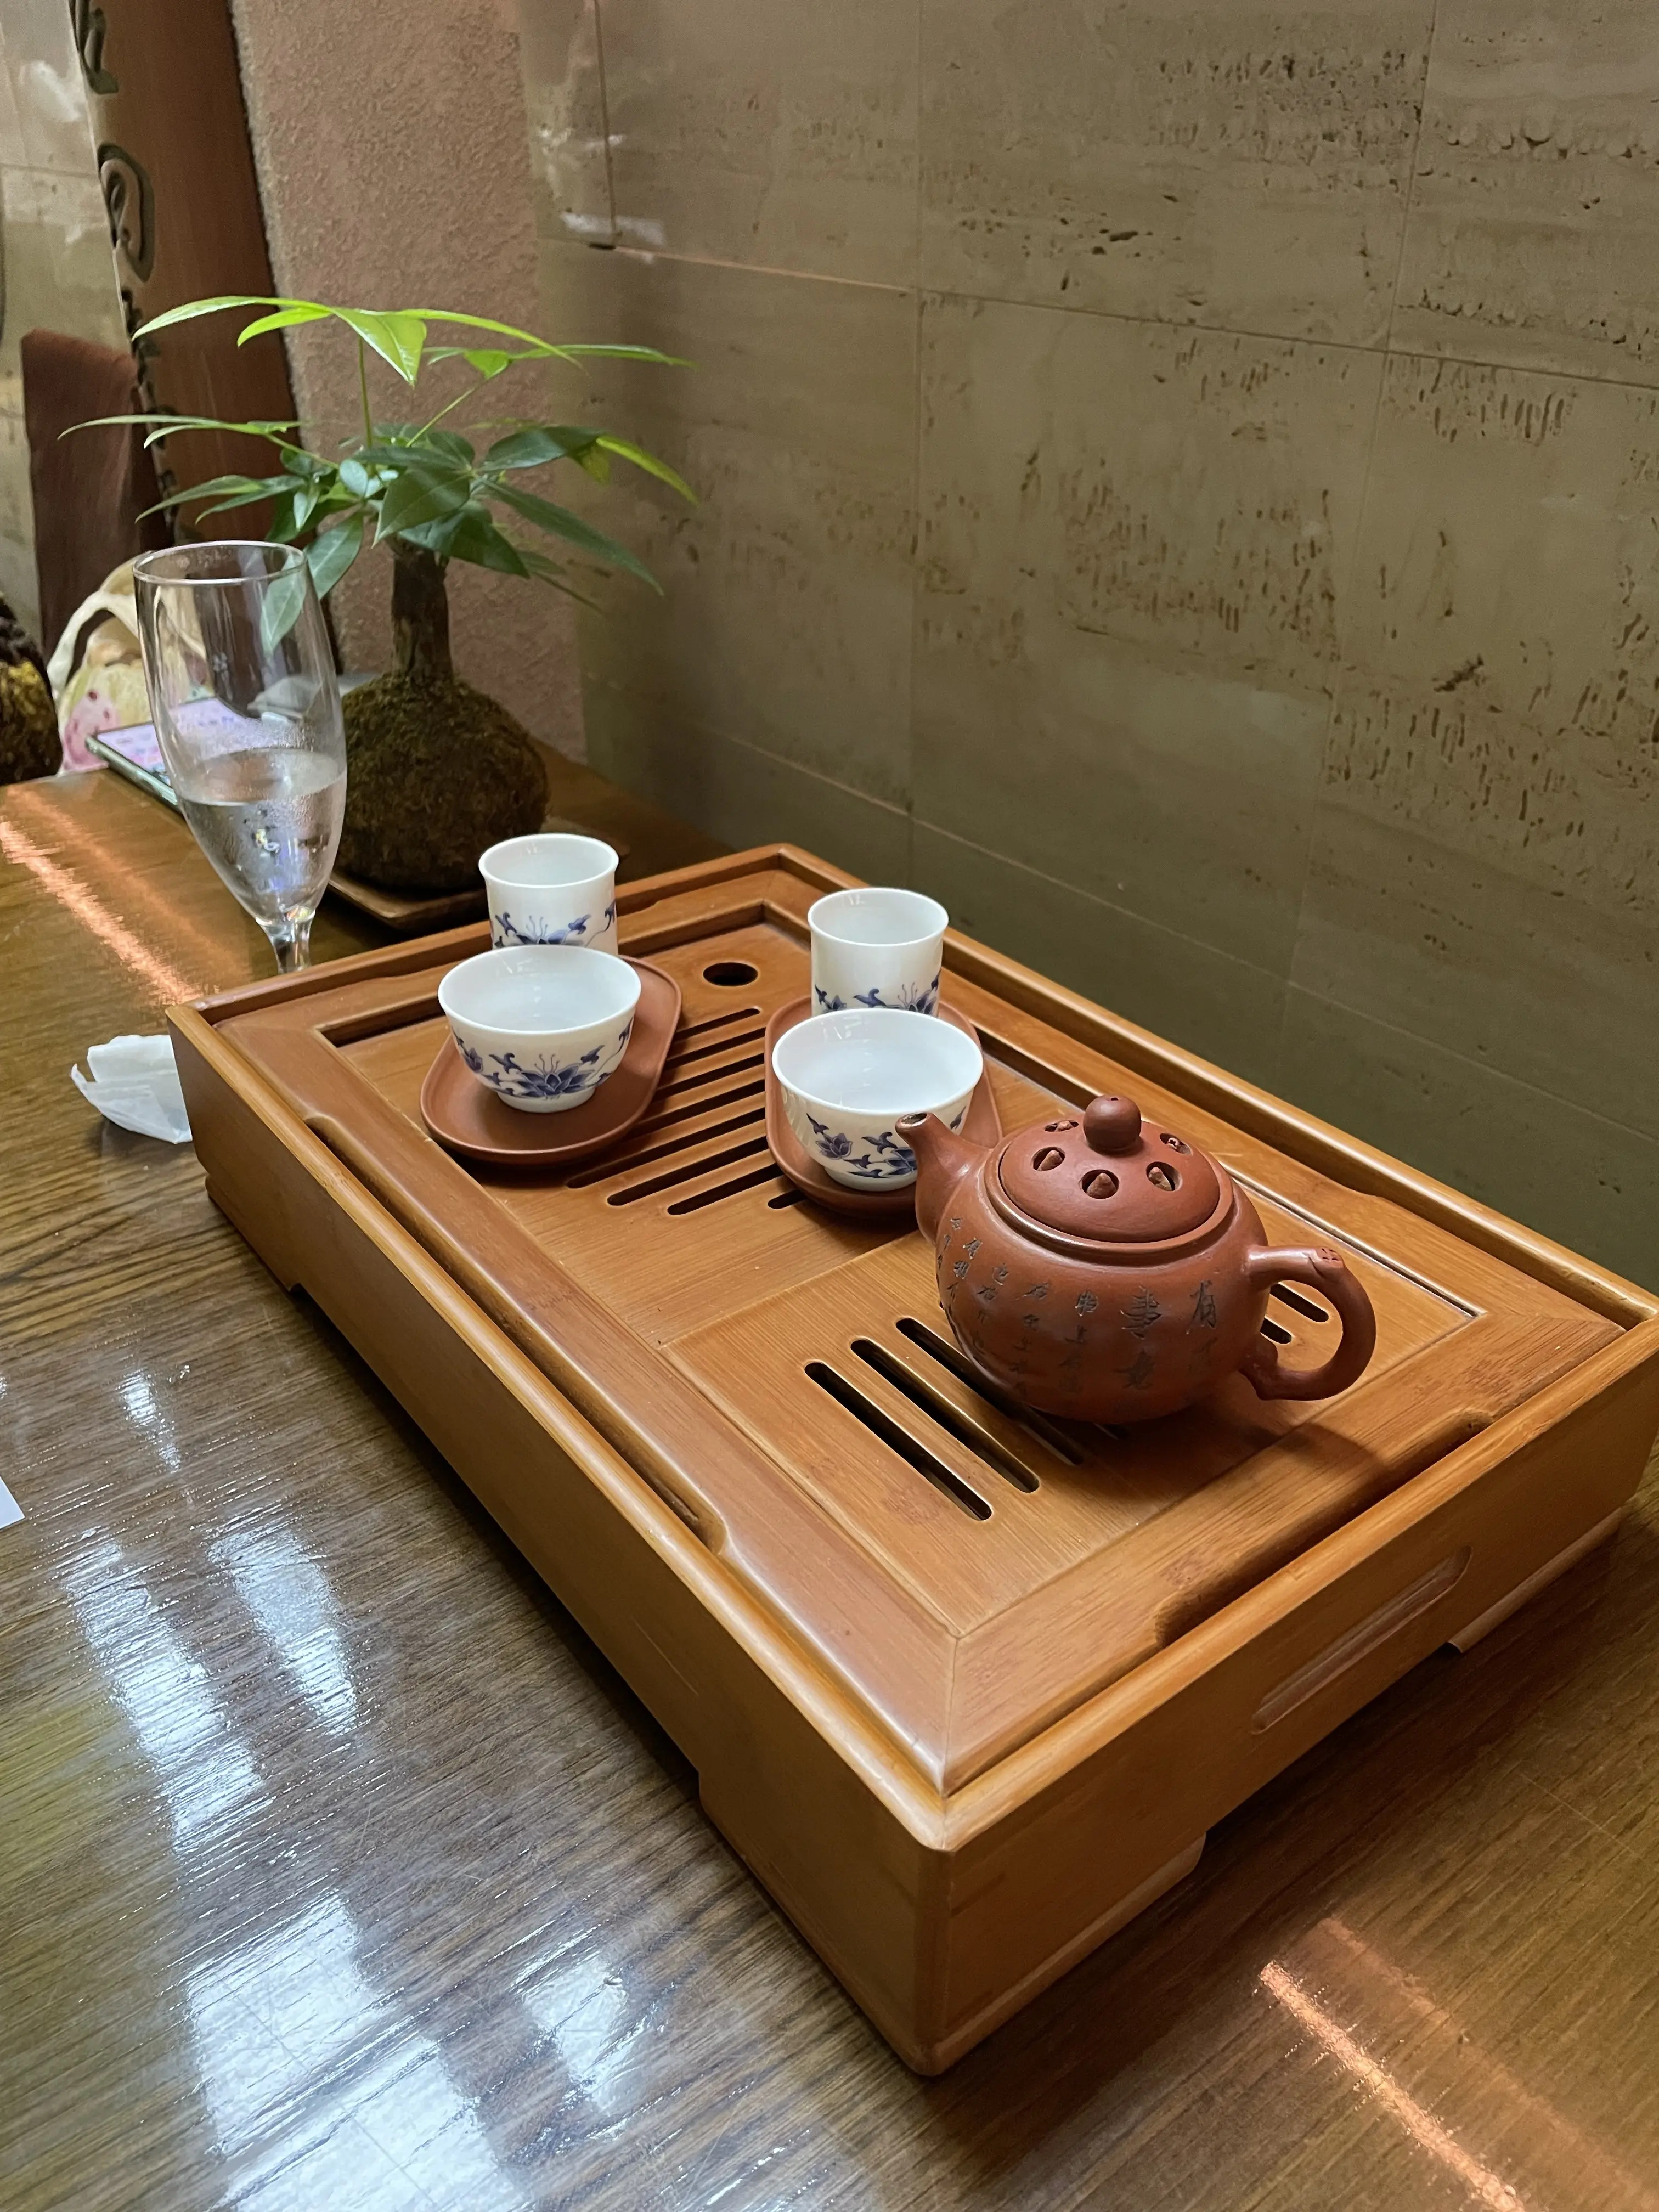 Wakiya一笑美茶樓、赤坂、テーブル、中国茶器、茶器、中国茶茶器セット、オシャレ、お洒落、素敵、茶色の急須、白い茶器、白い湯呑み、湯呑み茶碗